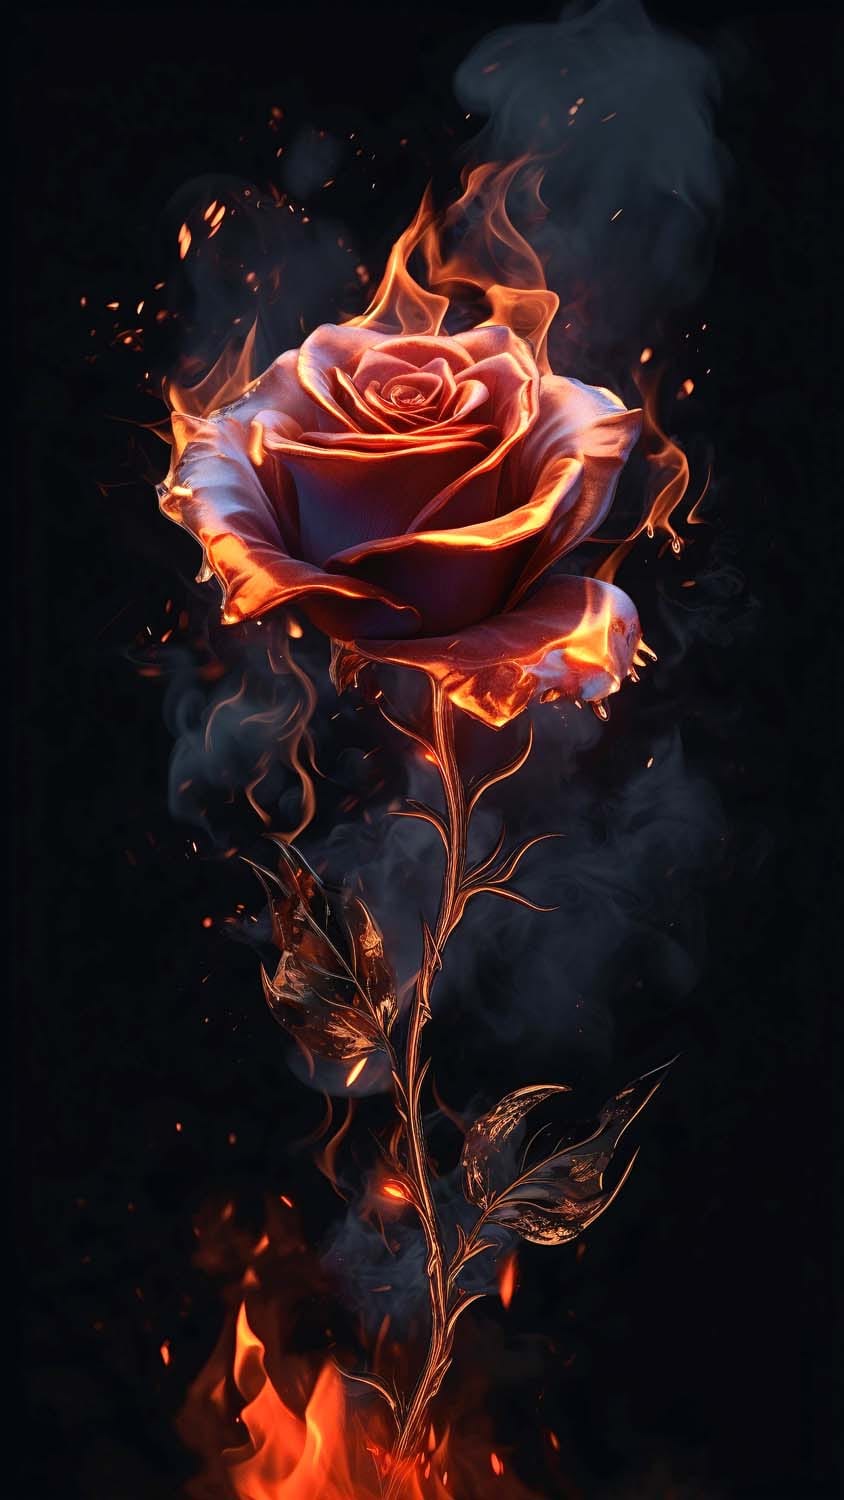 Rose on Fire iPhone Wallpaper 4K